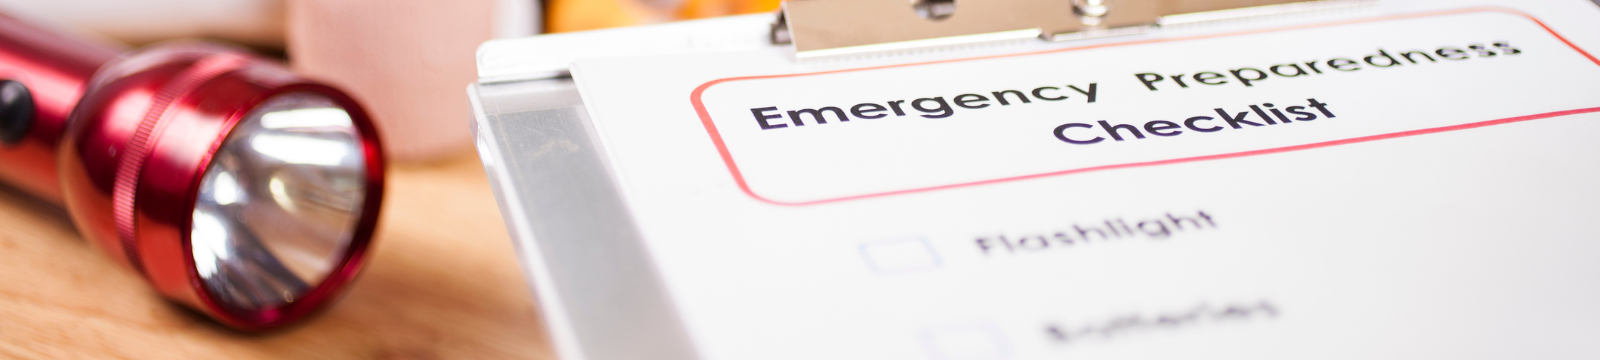 Emergency preparedness checklist and flashlight